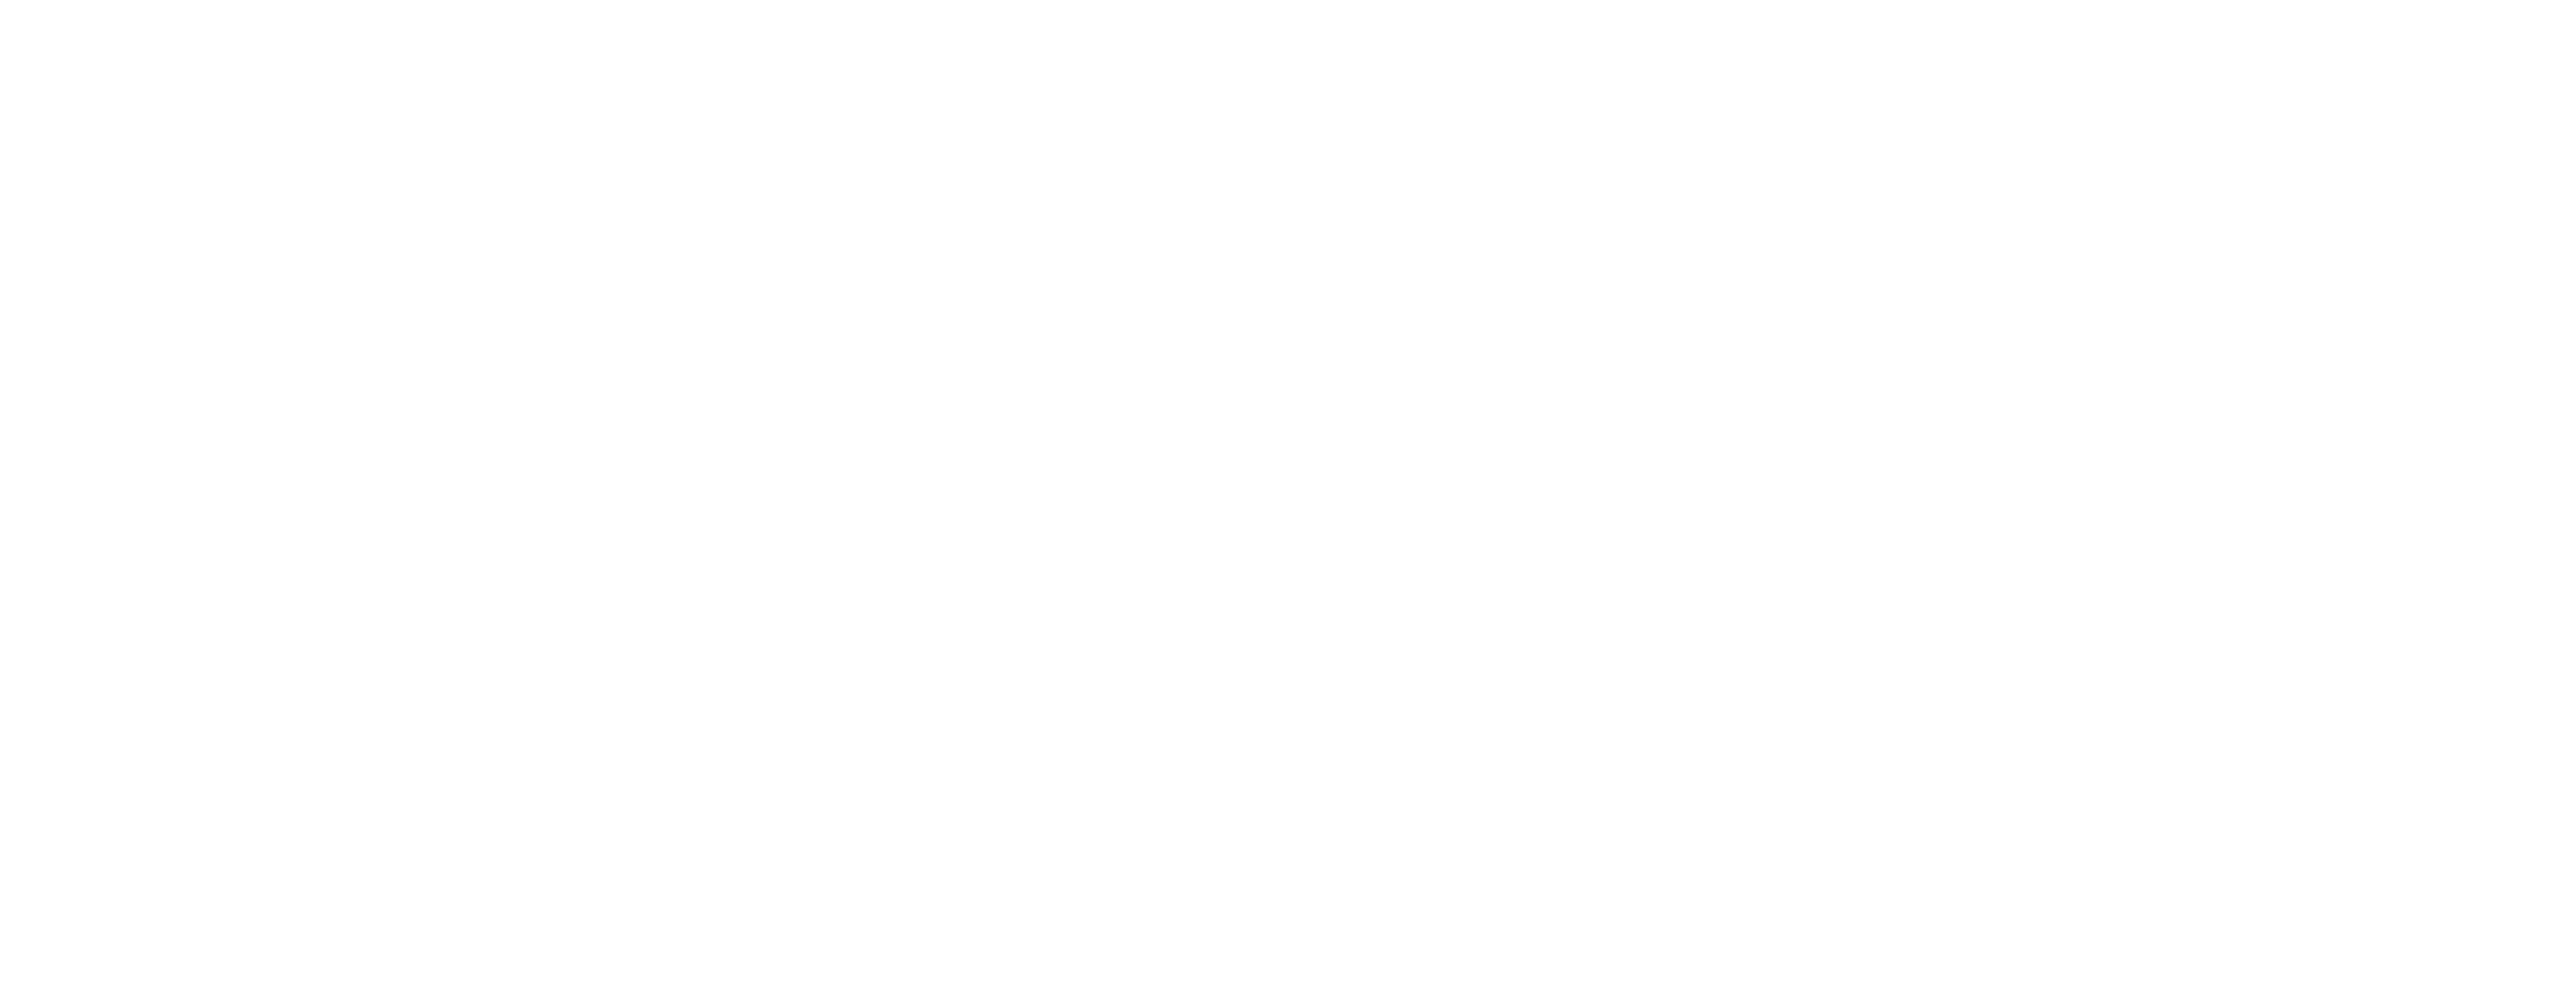 Next Experience